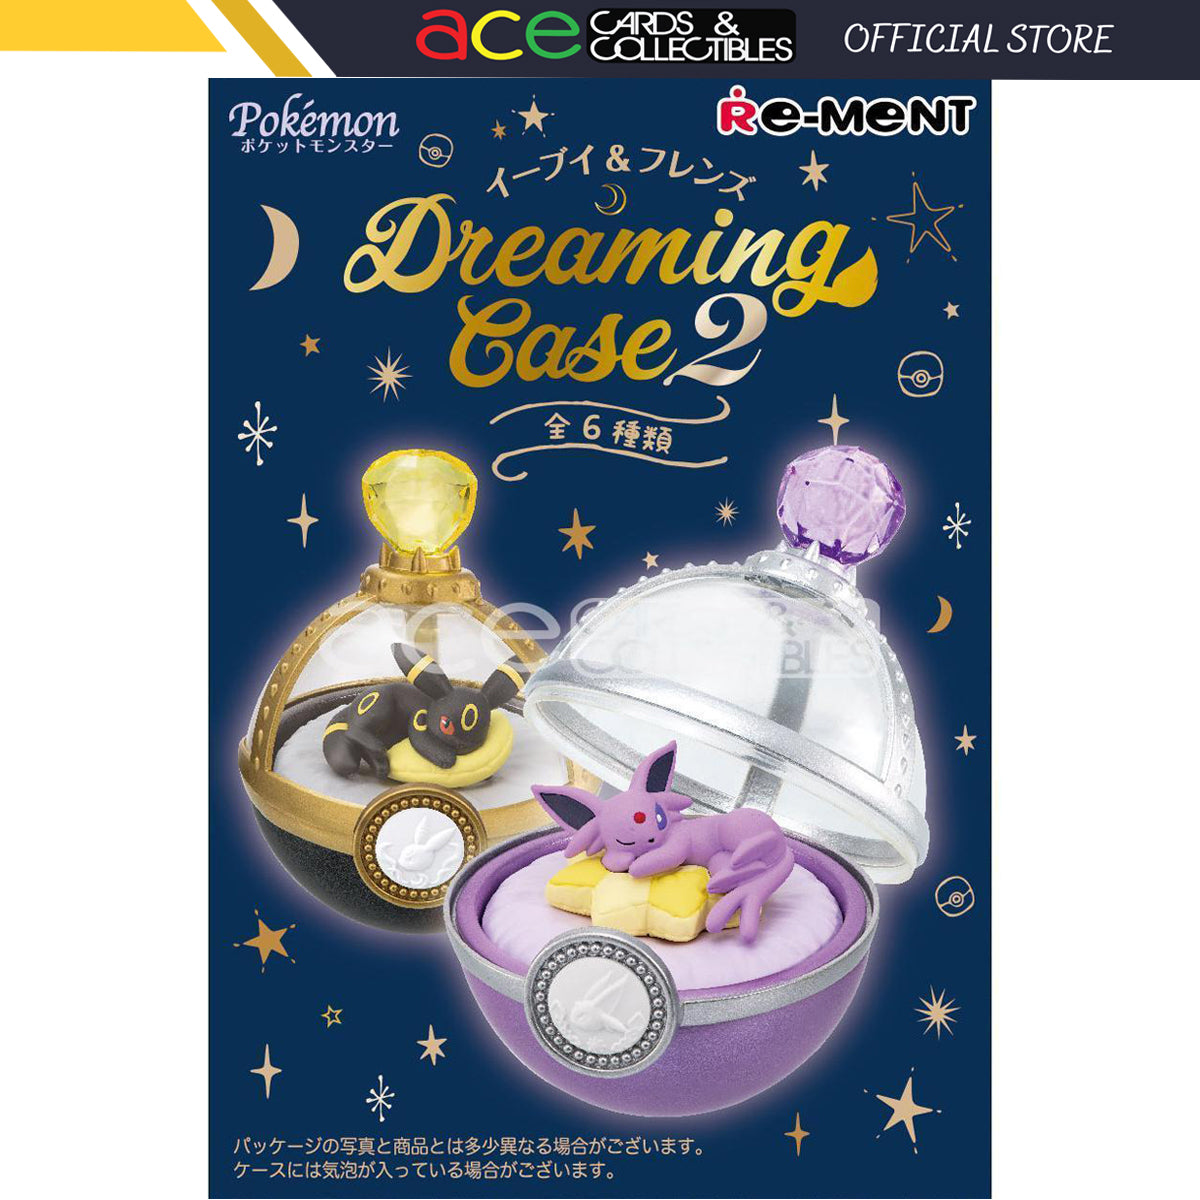 Re-Ment Pokémon Eevee Dreaming Case 2-Single Box (Random)-Re-Ment-Ace Cards & Collectibles